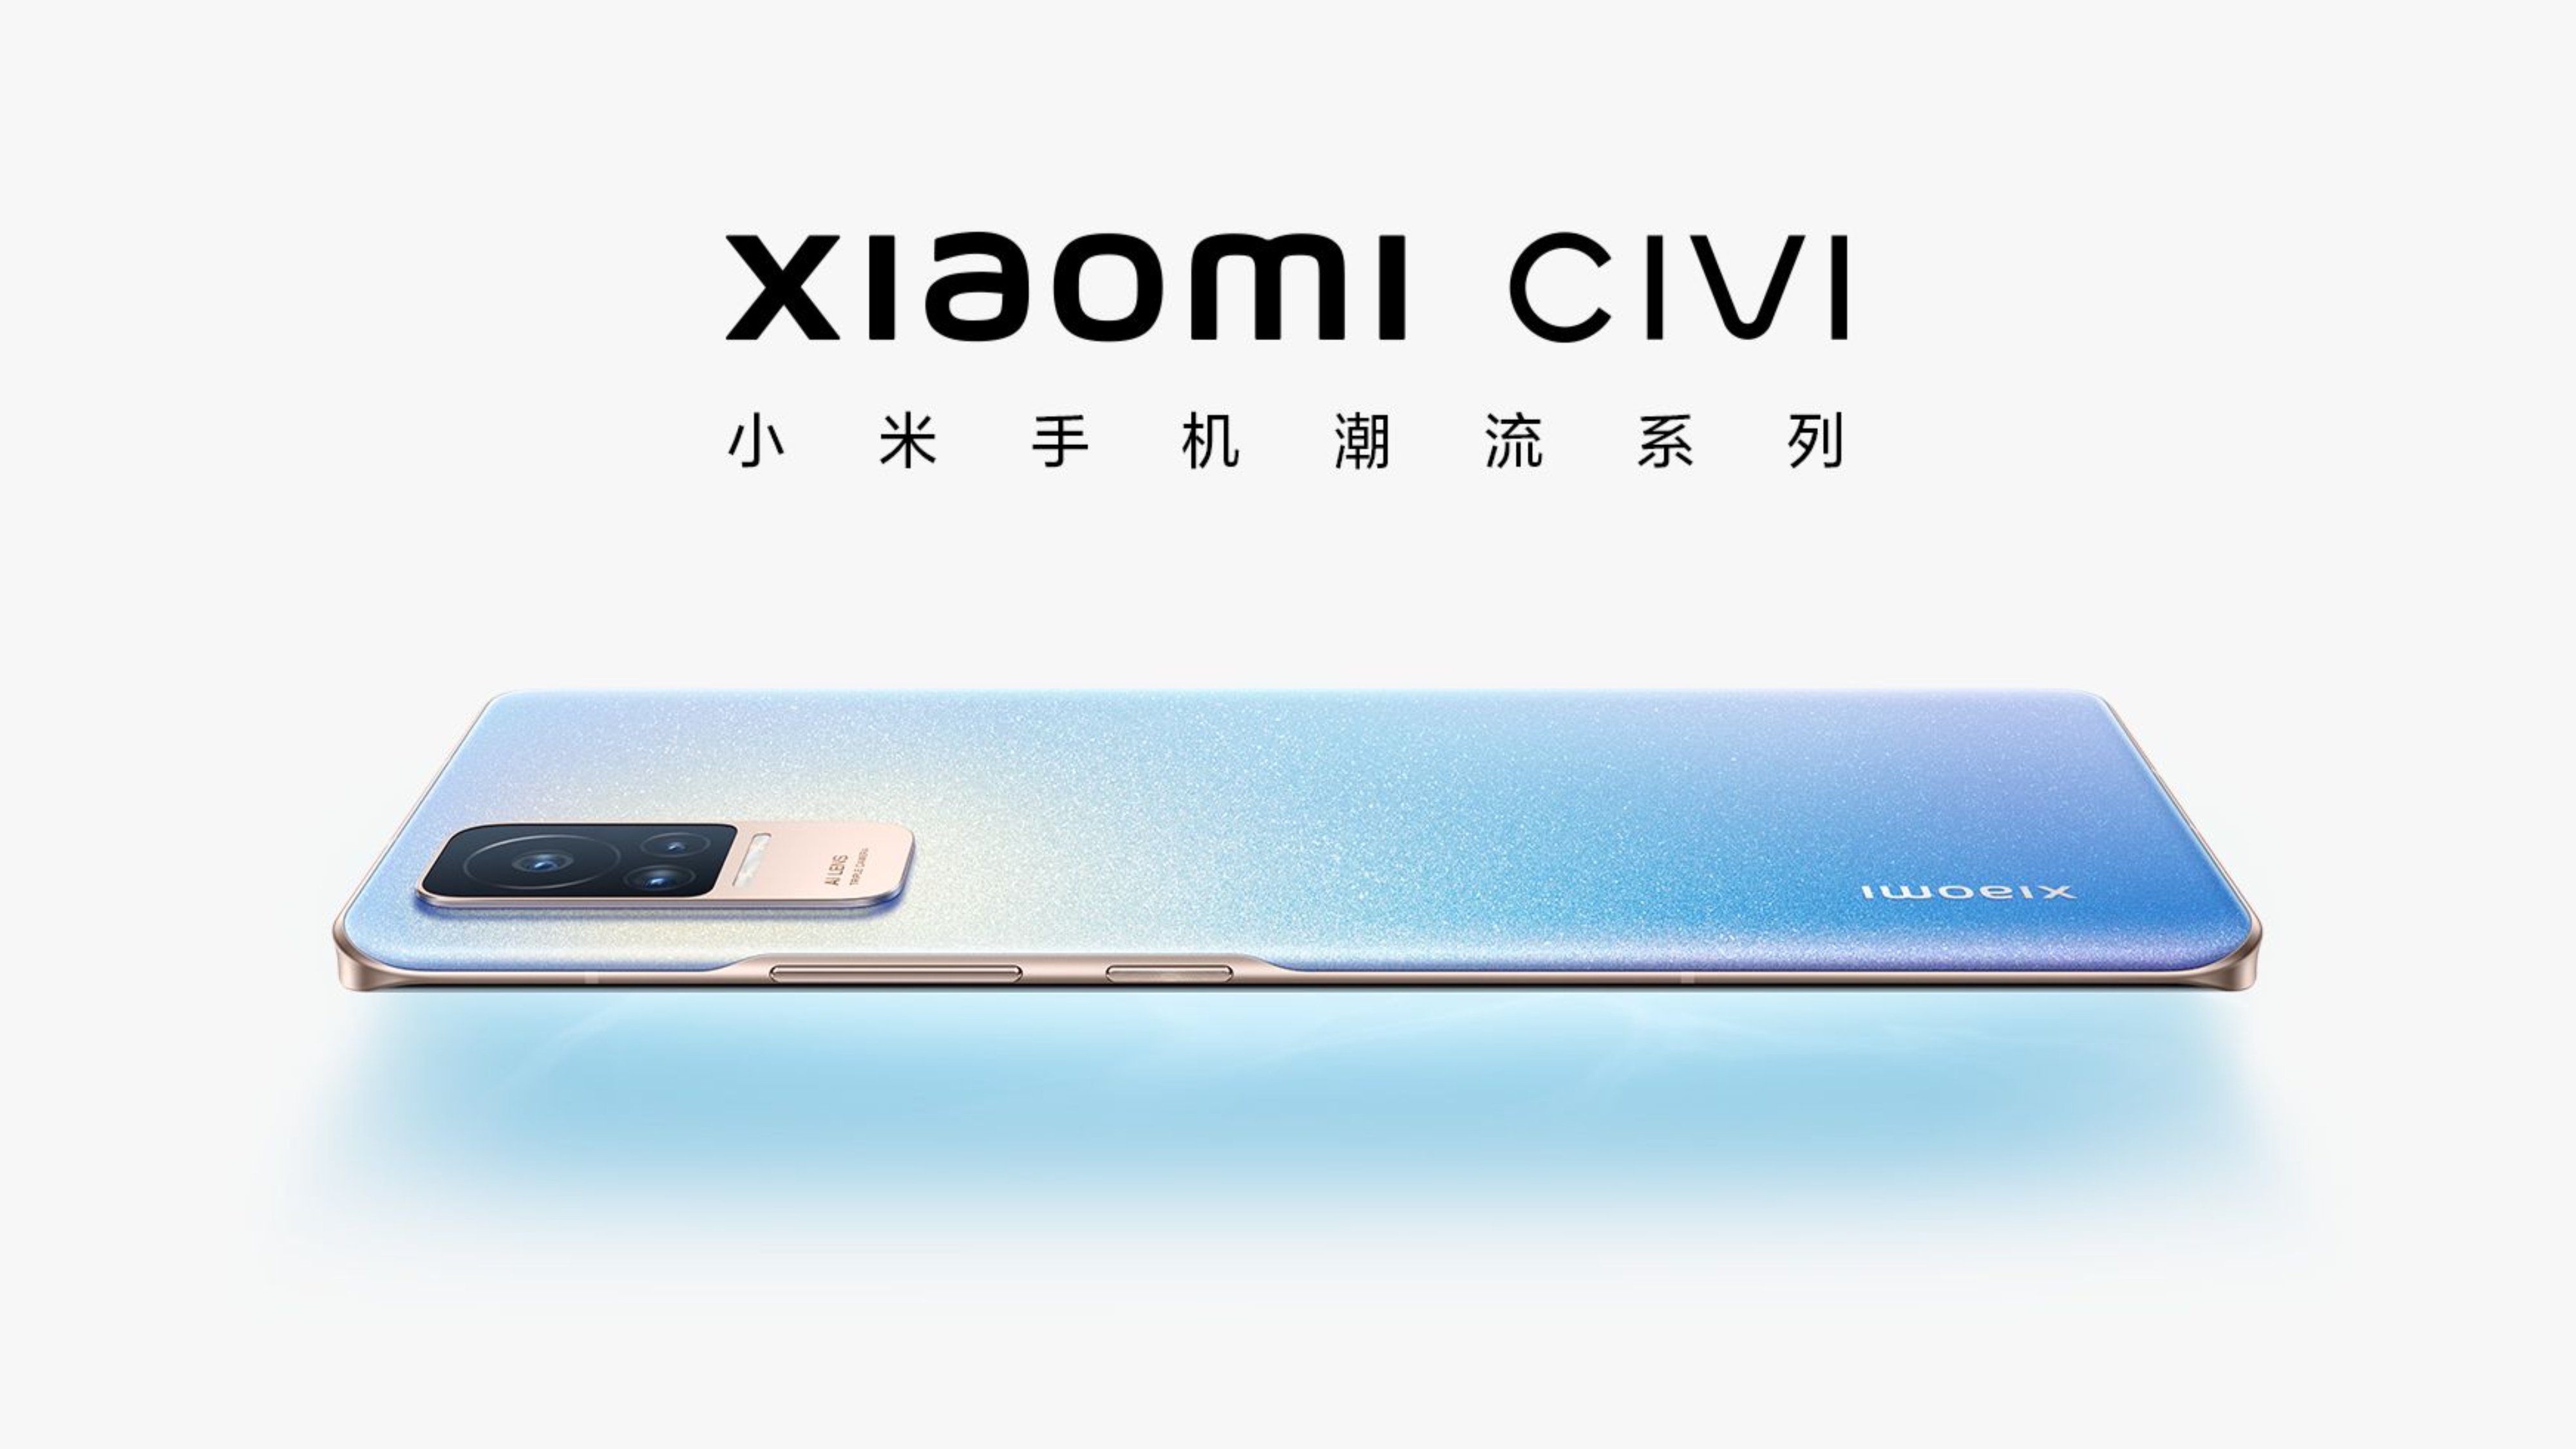 Xiaomi CIVI design officially revealed - Gizmochina